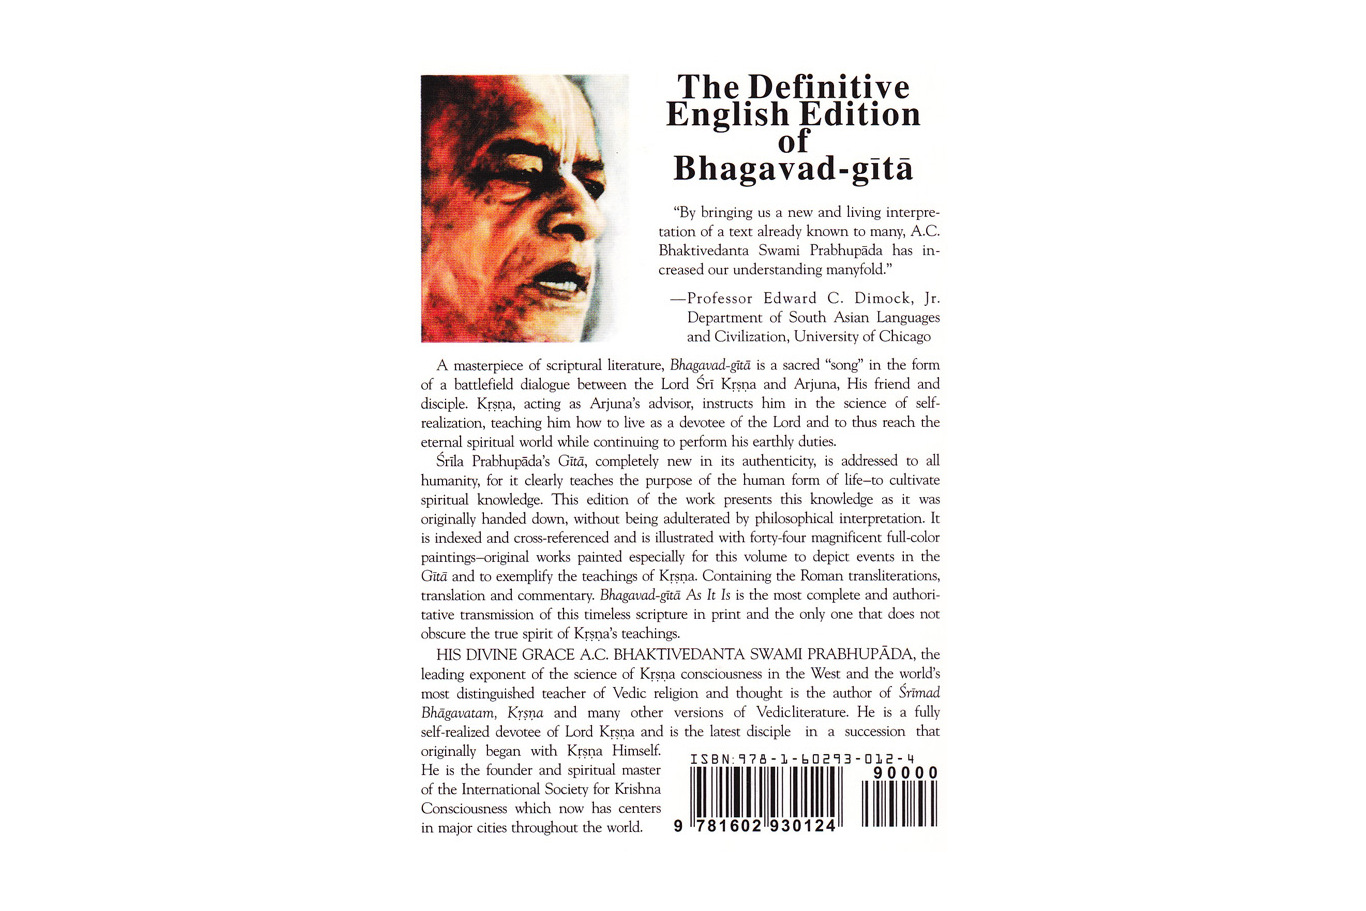 Pocket Bhagavad-Gita As It Is (Singular)